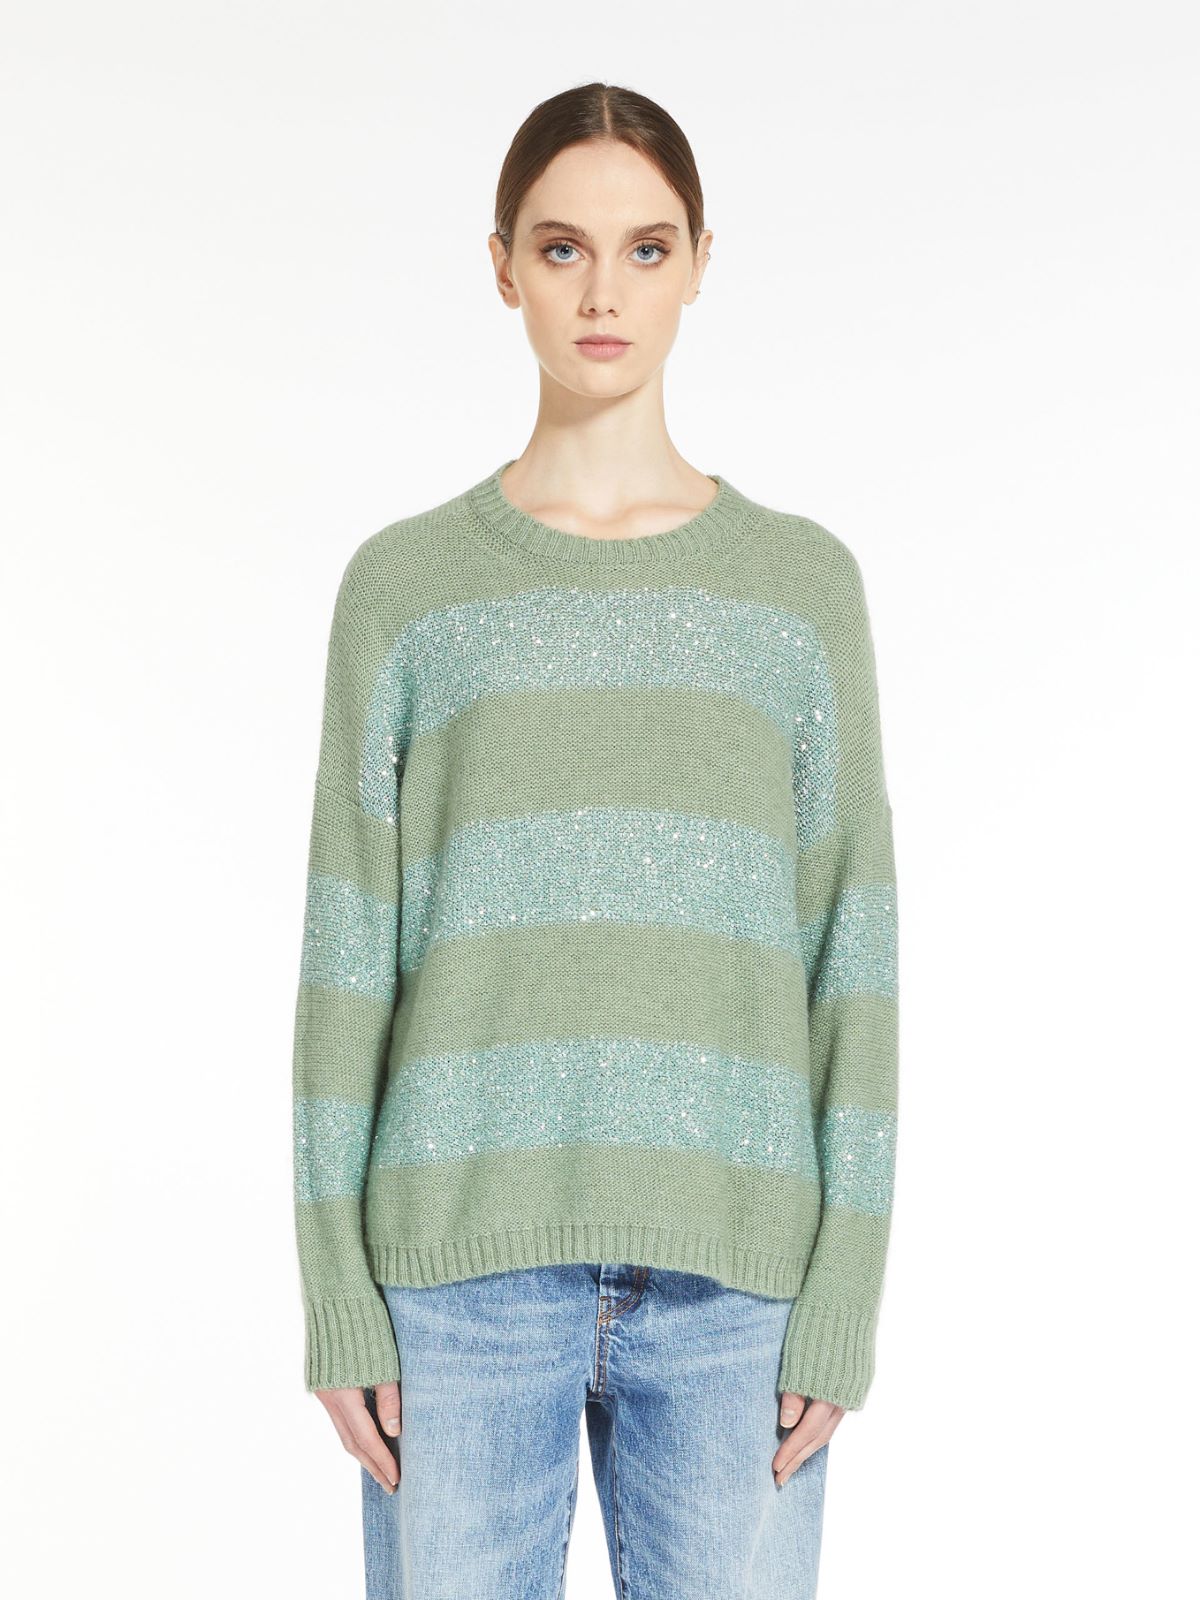 Sequin sweater - SAGE GREEN - Weekend Max Mara - 2